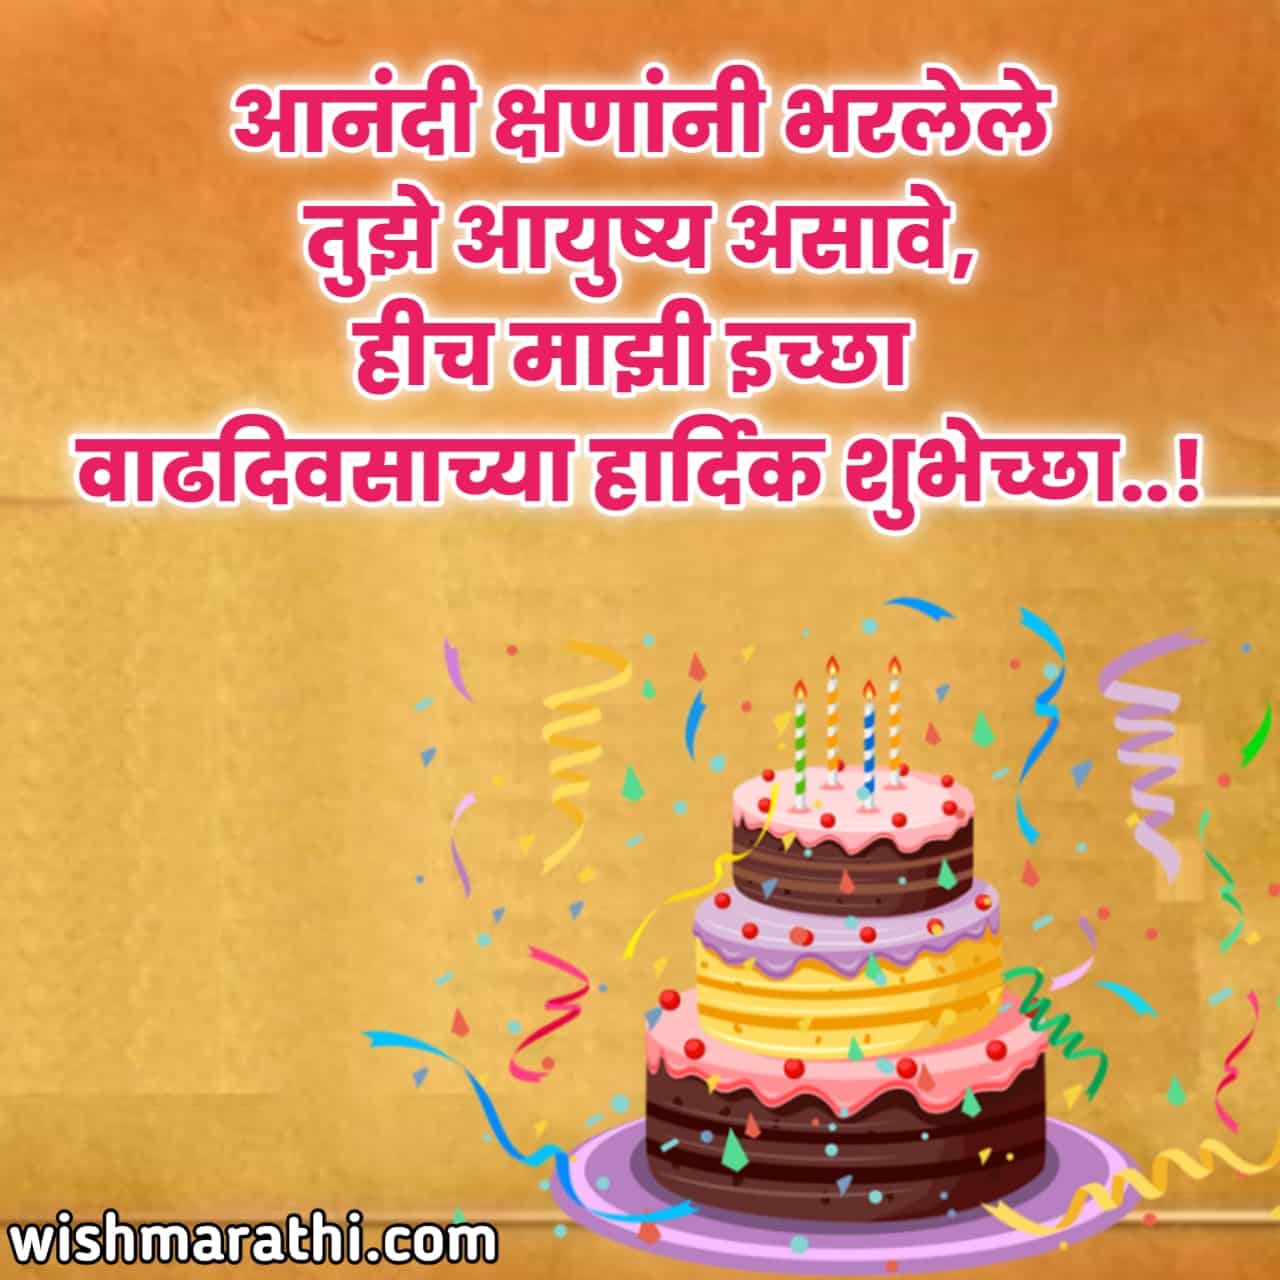 happy birthday wishes for girlfriend in marathi